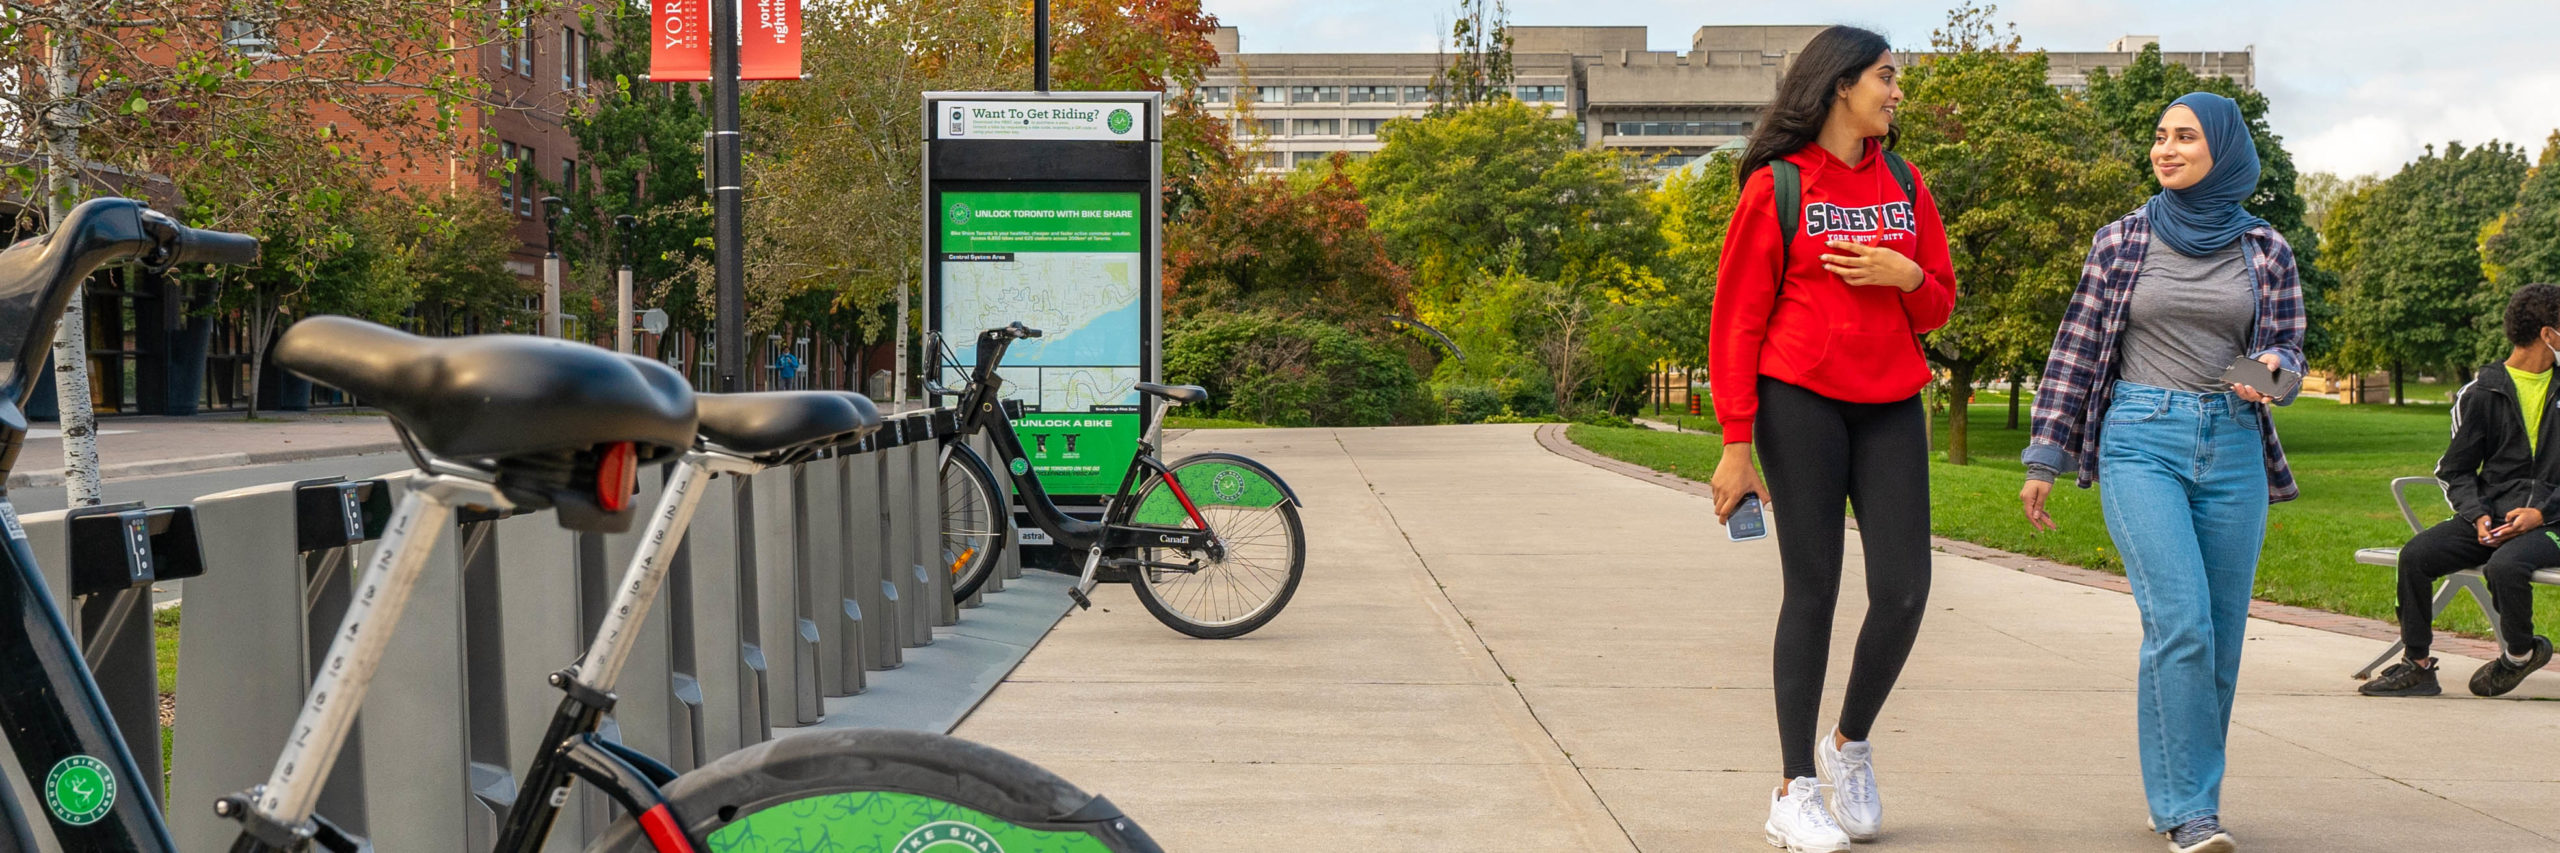 Bike share station on York University's Keele campus